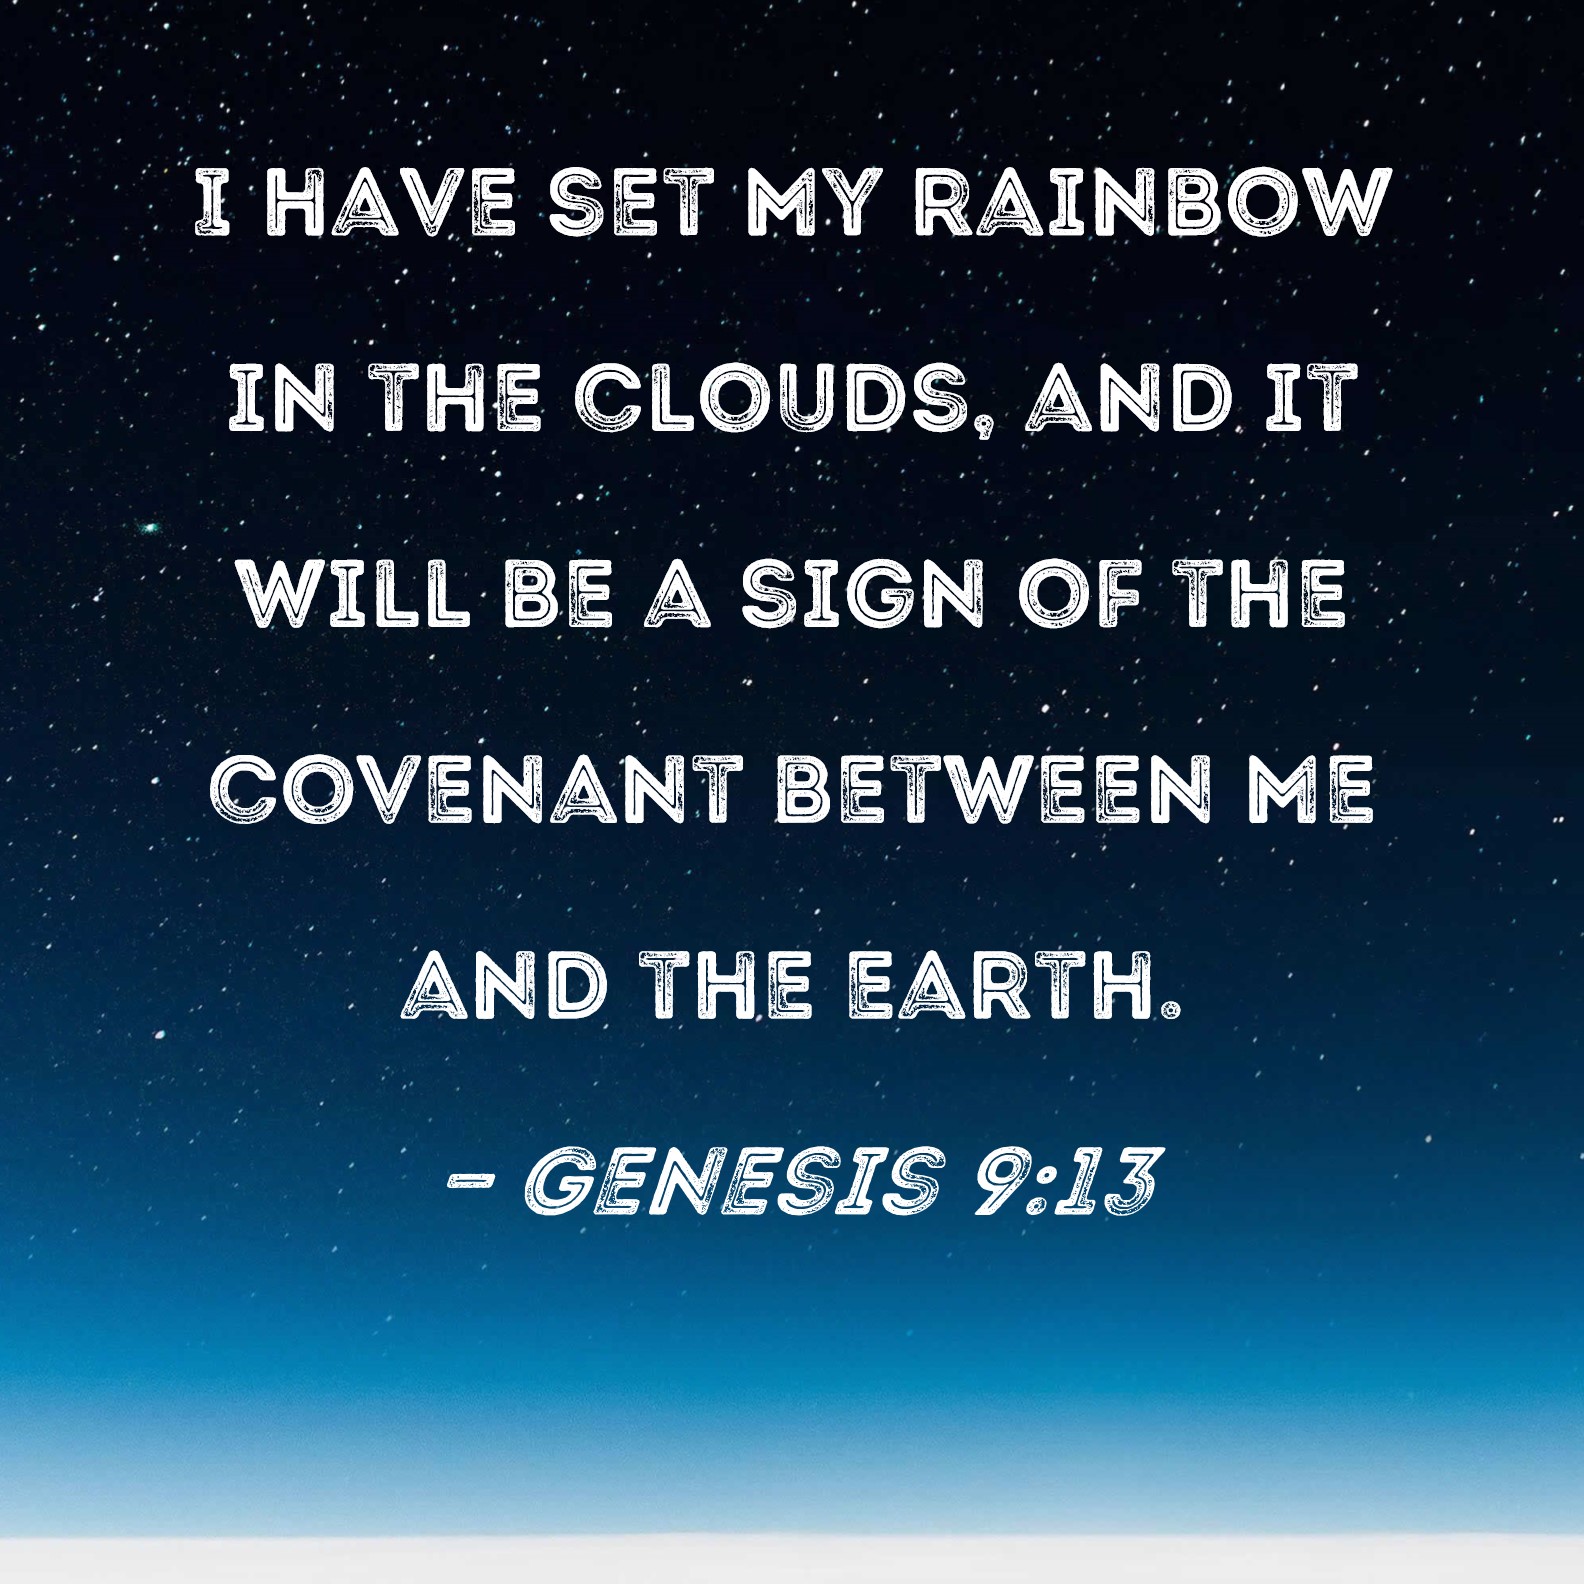 Genesis 9:13 NIV - God's Promise of the Rainbow